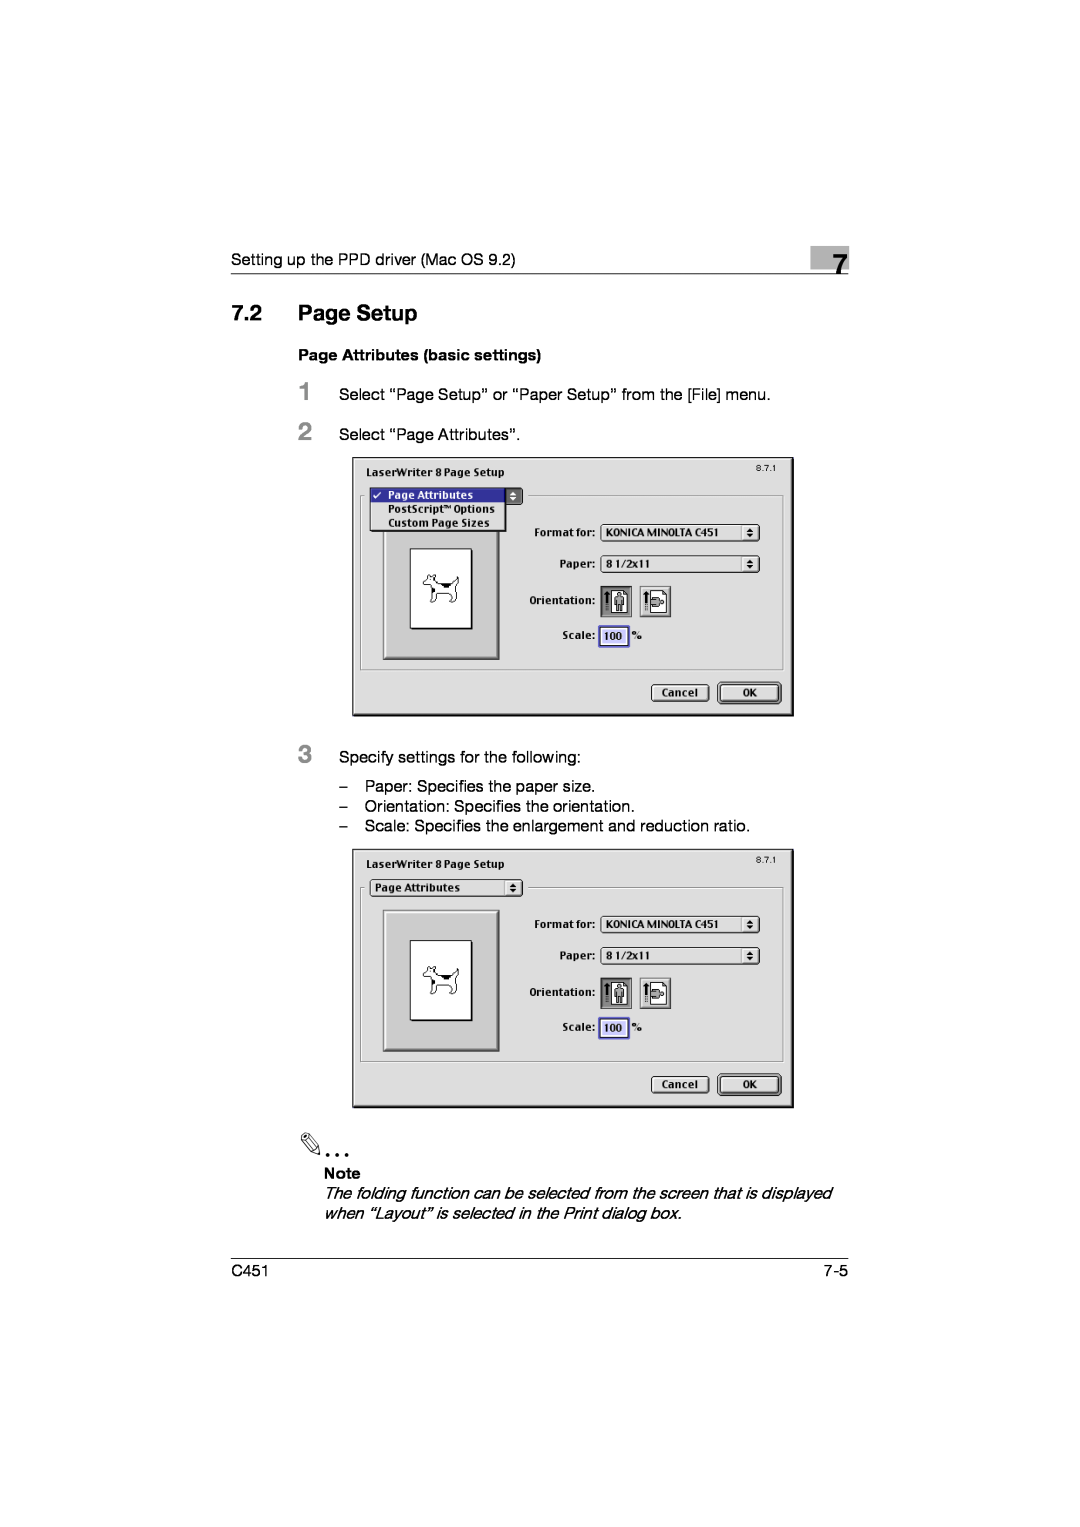 Konica Minolta C451 manual 7.2Page Setup, Page Attributes basic settings 